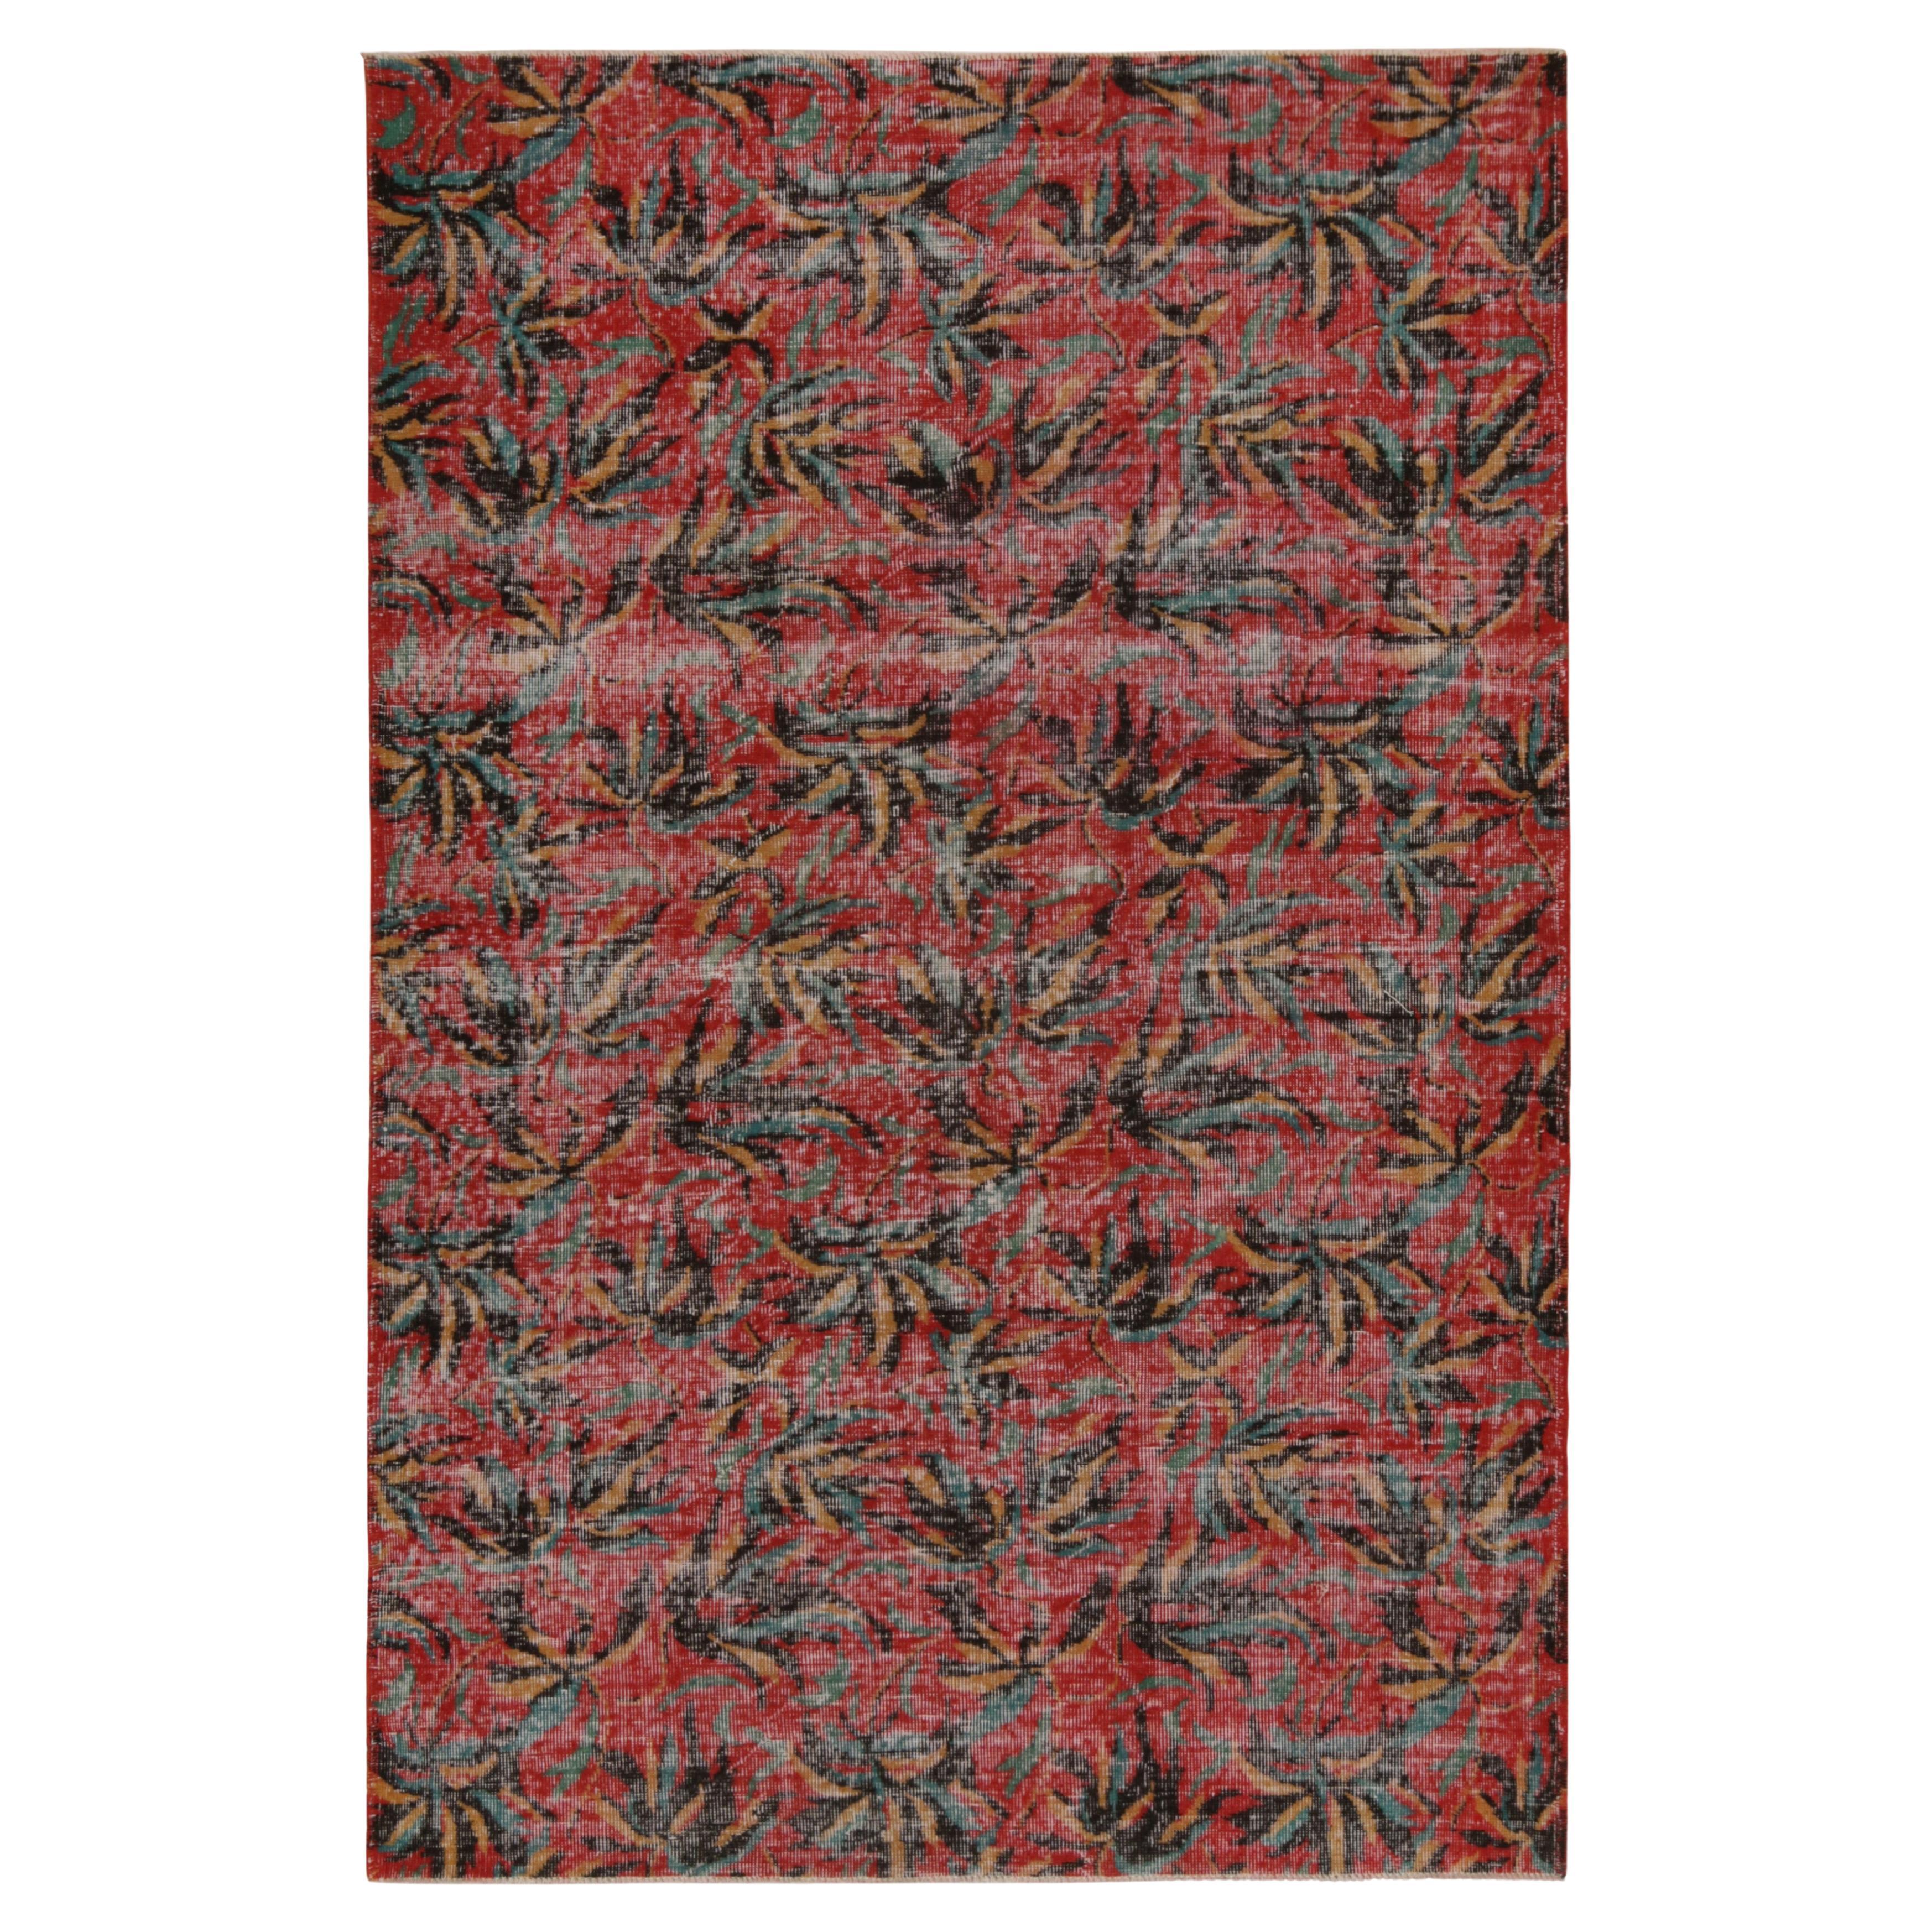 Vintage Distressed Zeki Müren Rug in Red and Black Patterns by Rug & Kilim For Sale